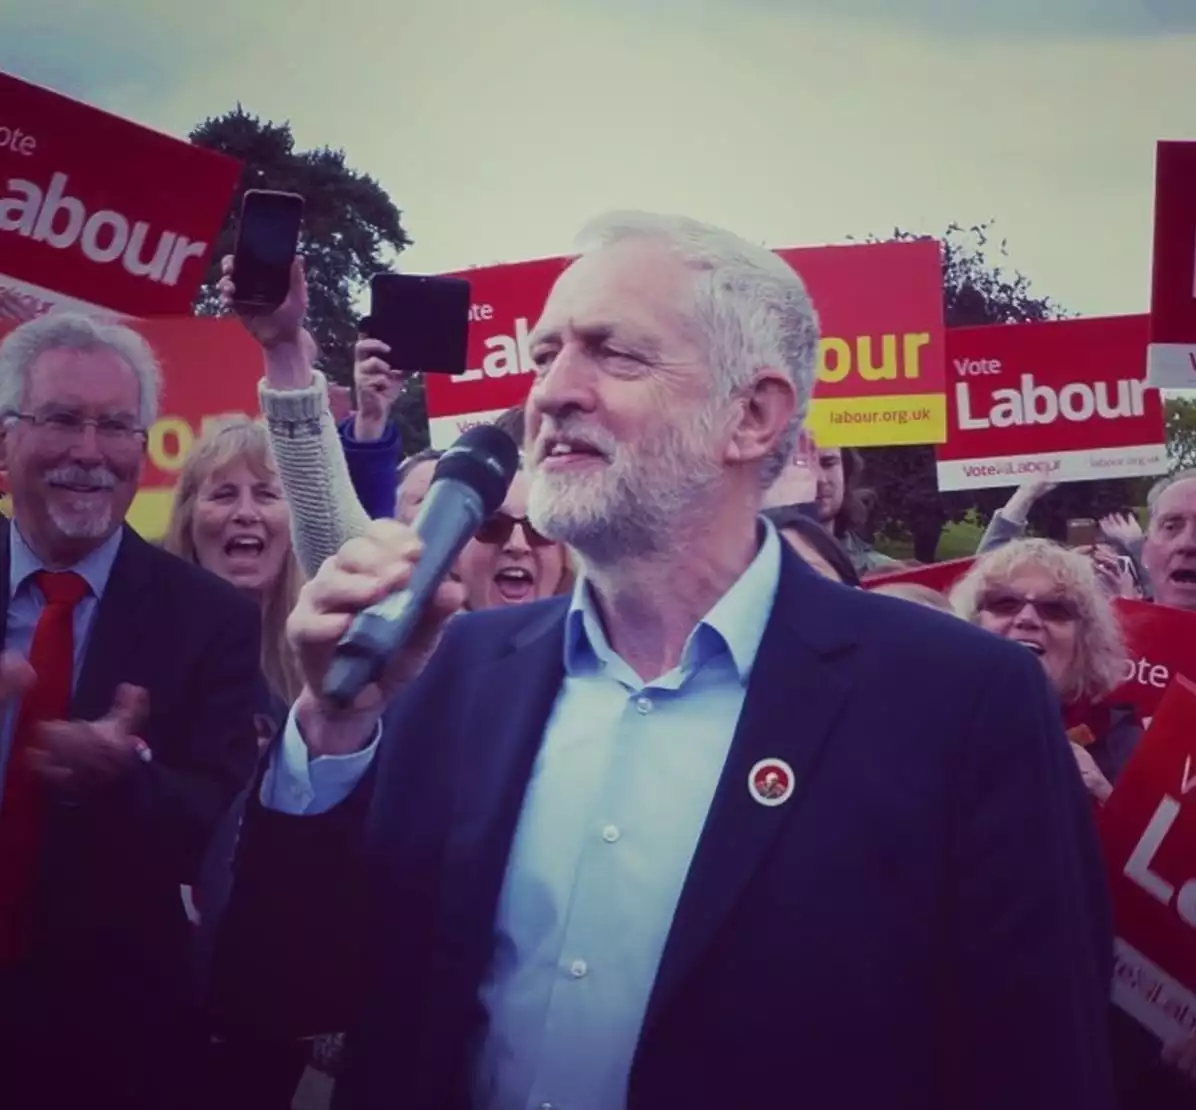 Jeremy Corbyn MP - photo: uklabour on Instagram.com